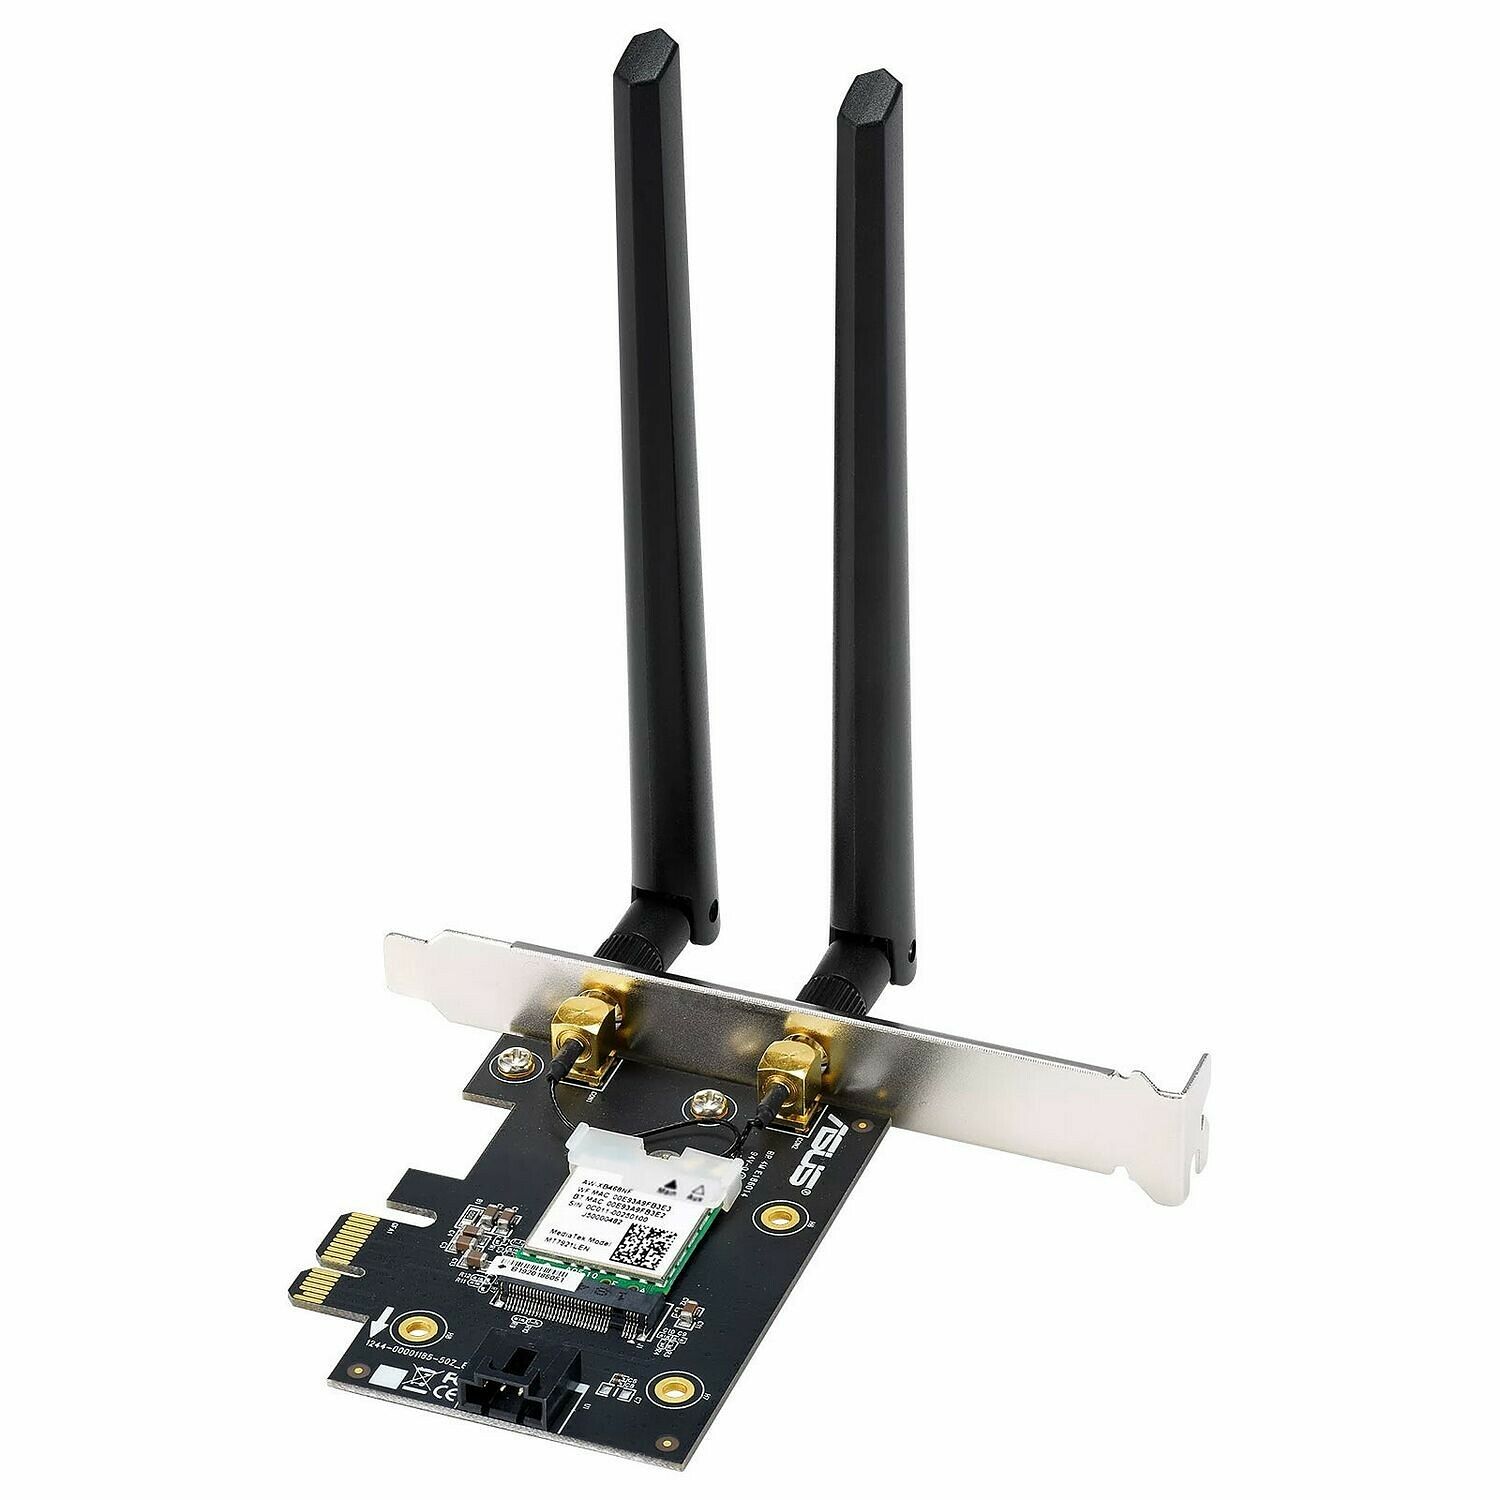 Carte WiFi PCI-Express 11n 300Mbps Tp-link TL-WN881ND - Achat / Vente sur